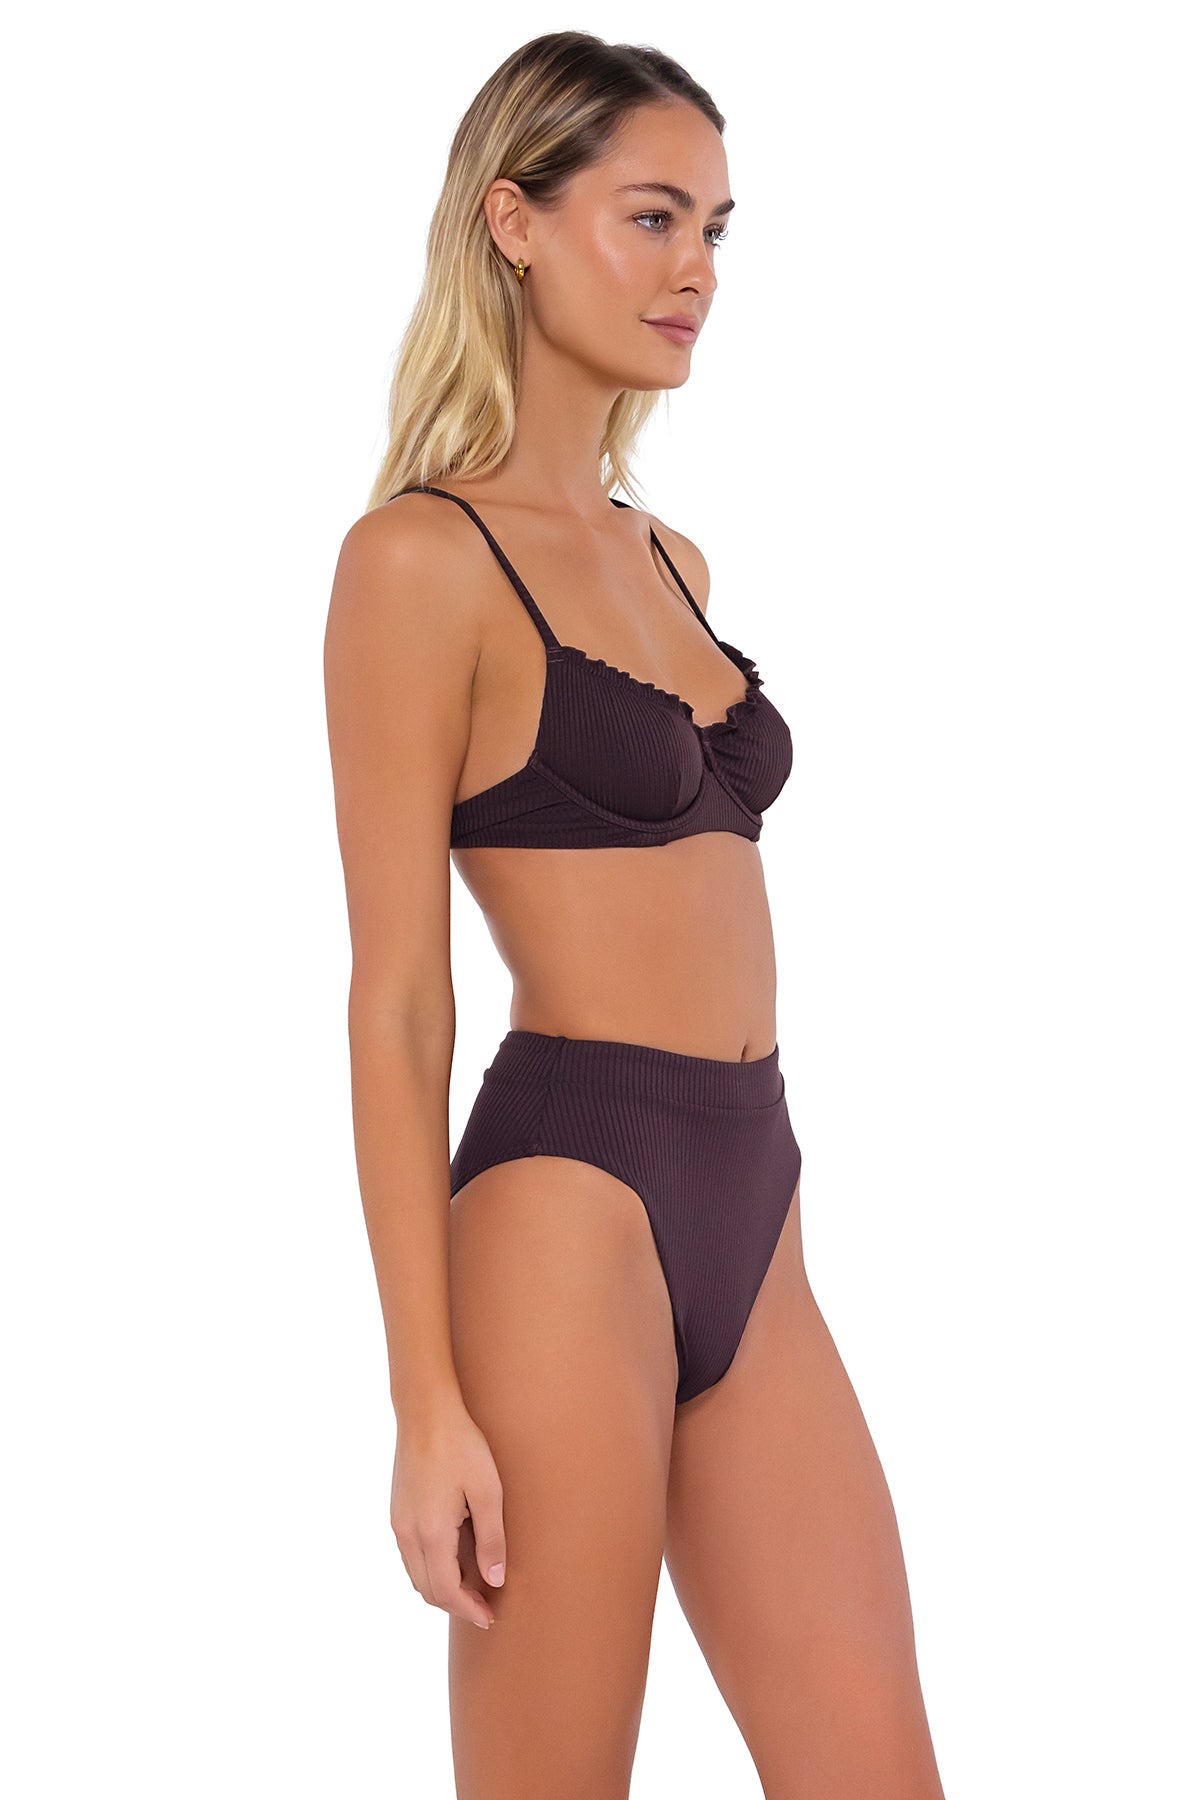 Side pose #1 of Jessica wearing B Swim Java Flat Rib Lyra Top with matching Margot bikini bottom